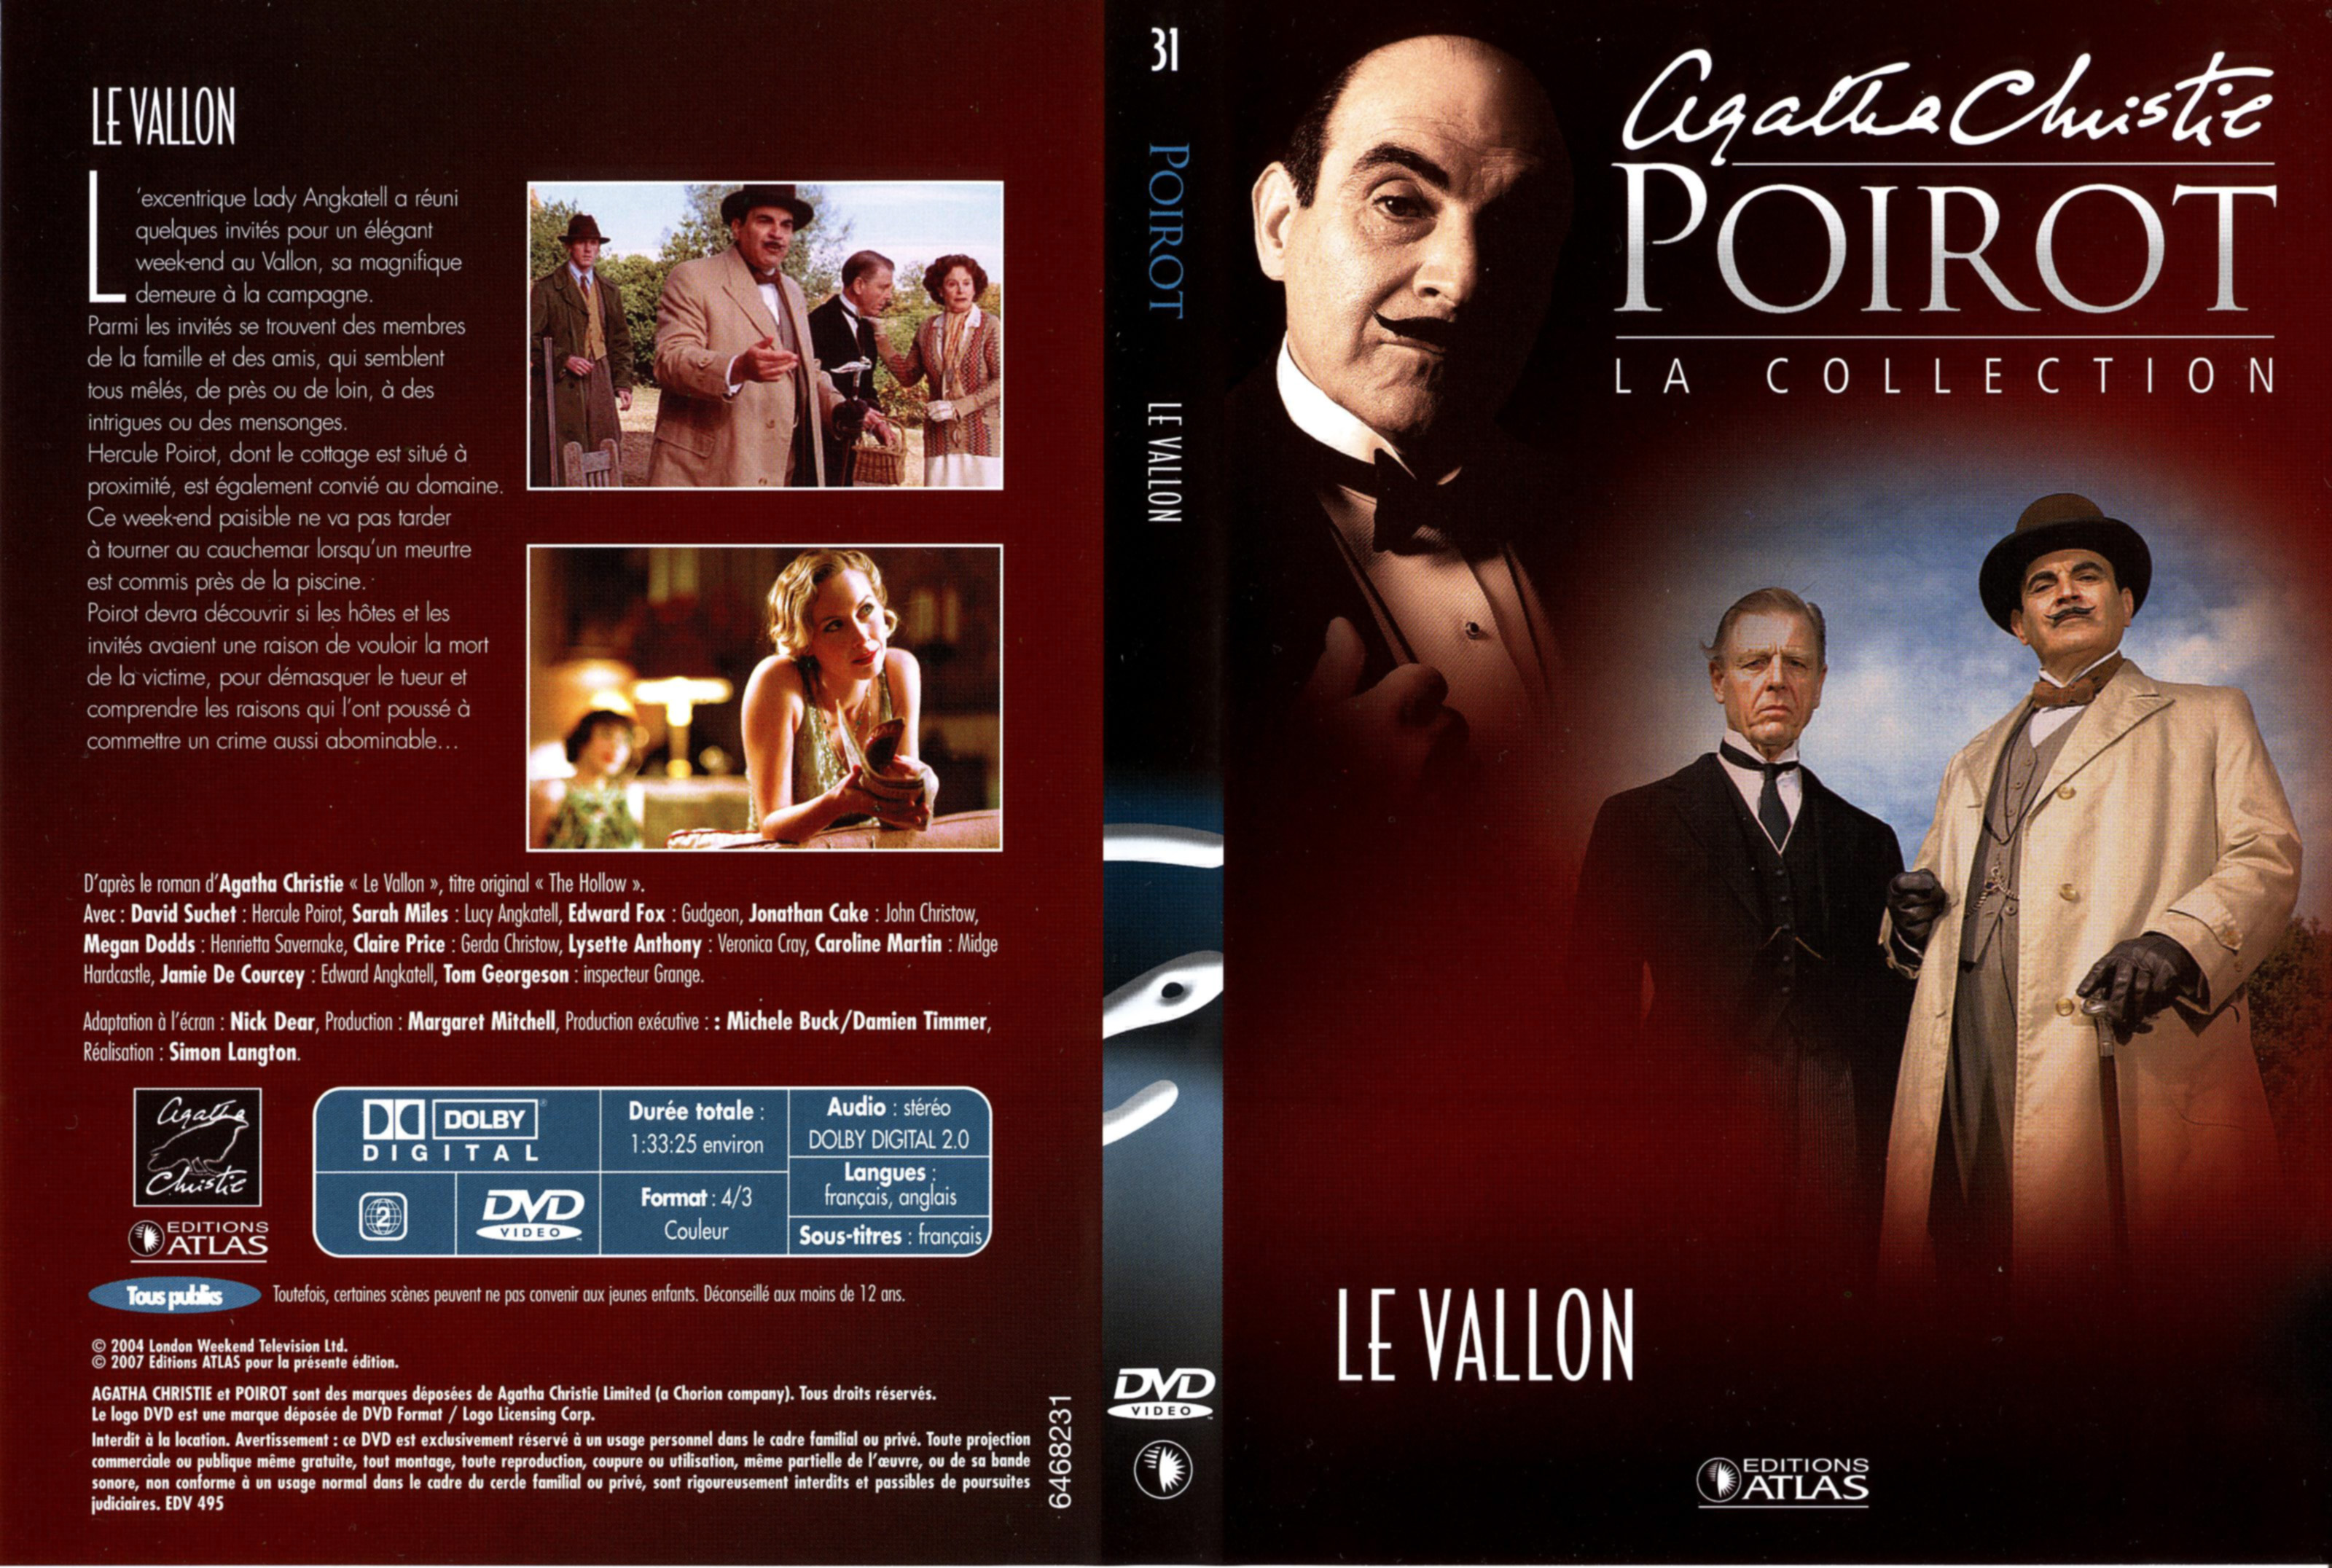 Jaquette DVD Hercule Poirot vol 31